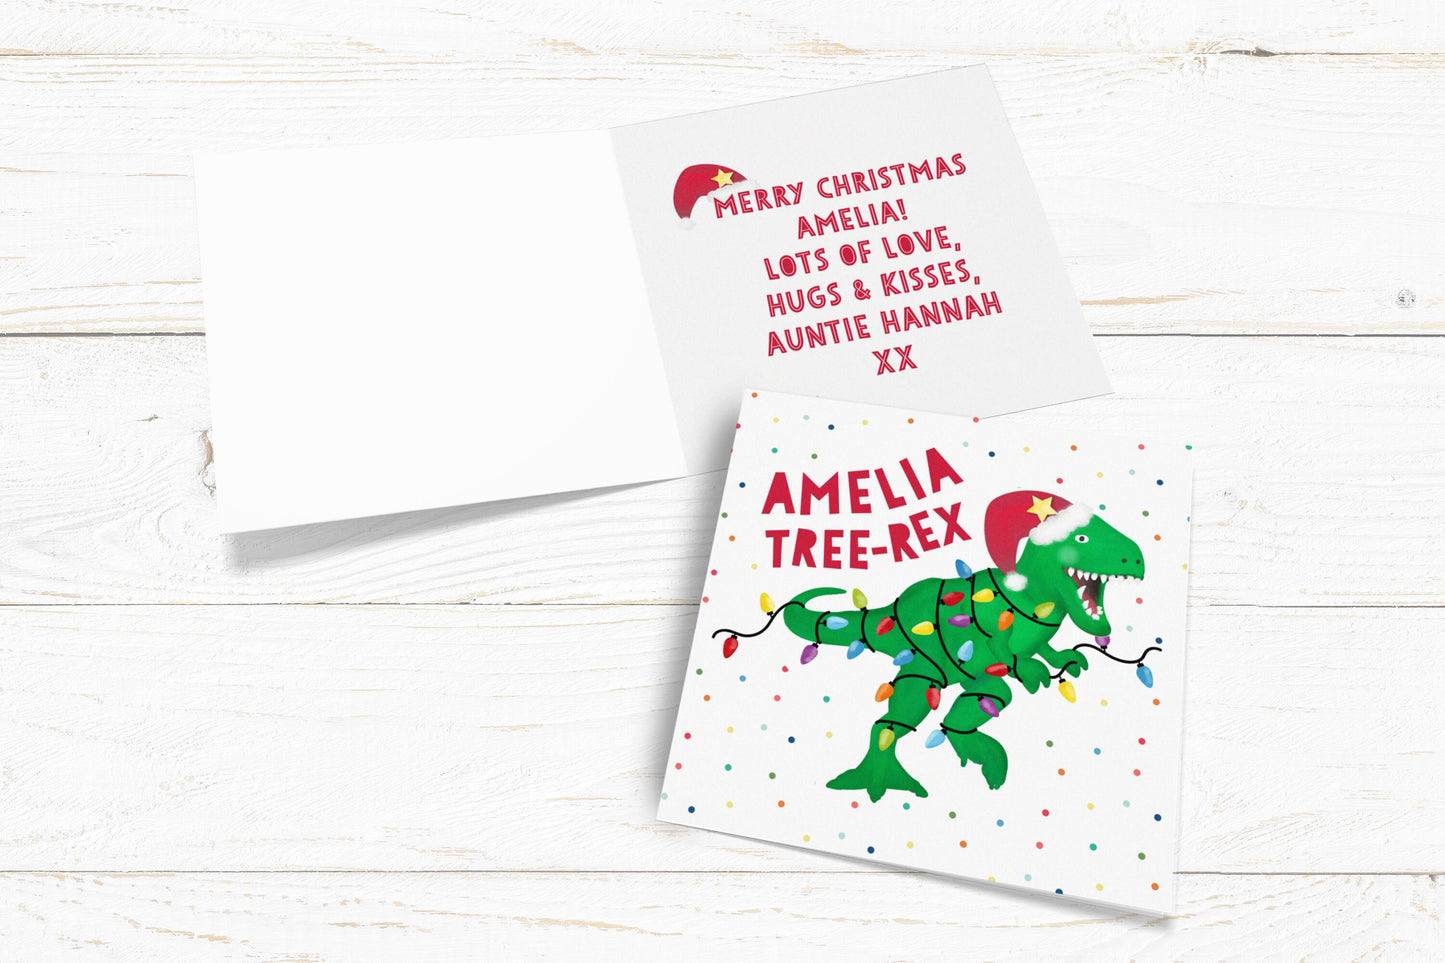 Tree-Rex Christmas Card. Personalised Christmas Card. T Rex Card. Cute Dinosaur Christmas Card. Cute Christmas Cards. Send Direct Option.